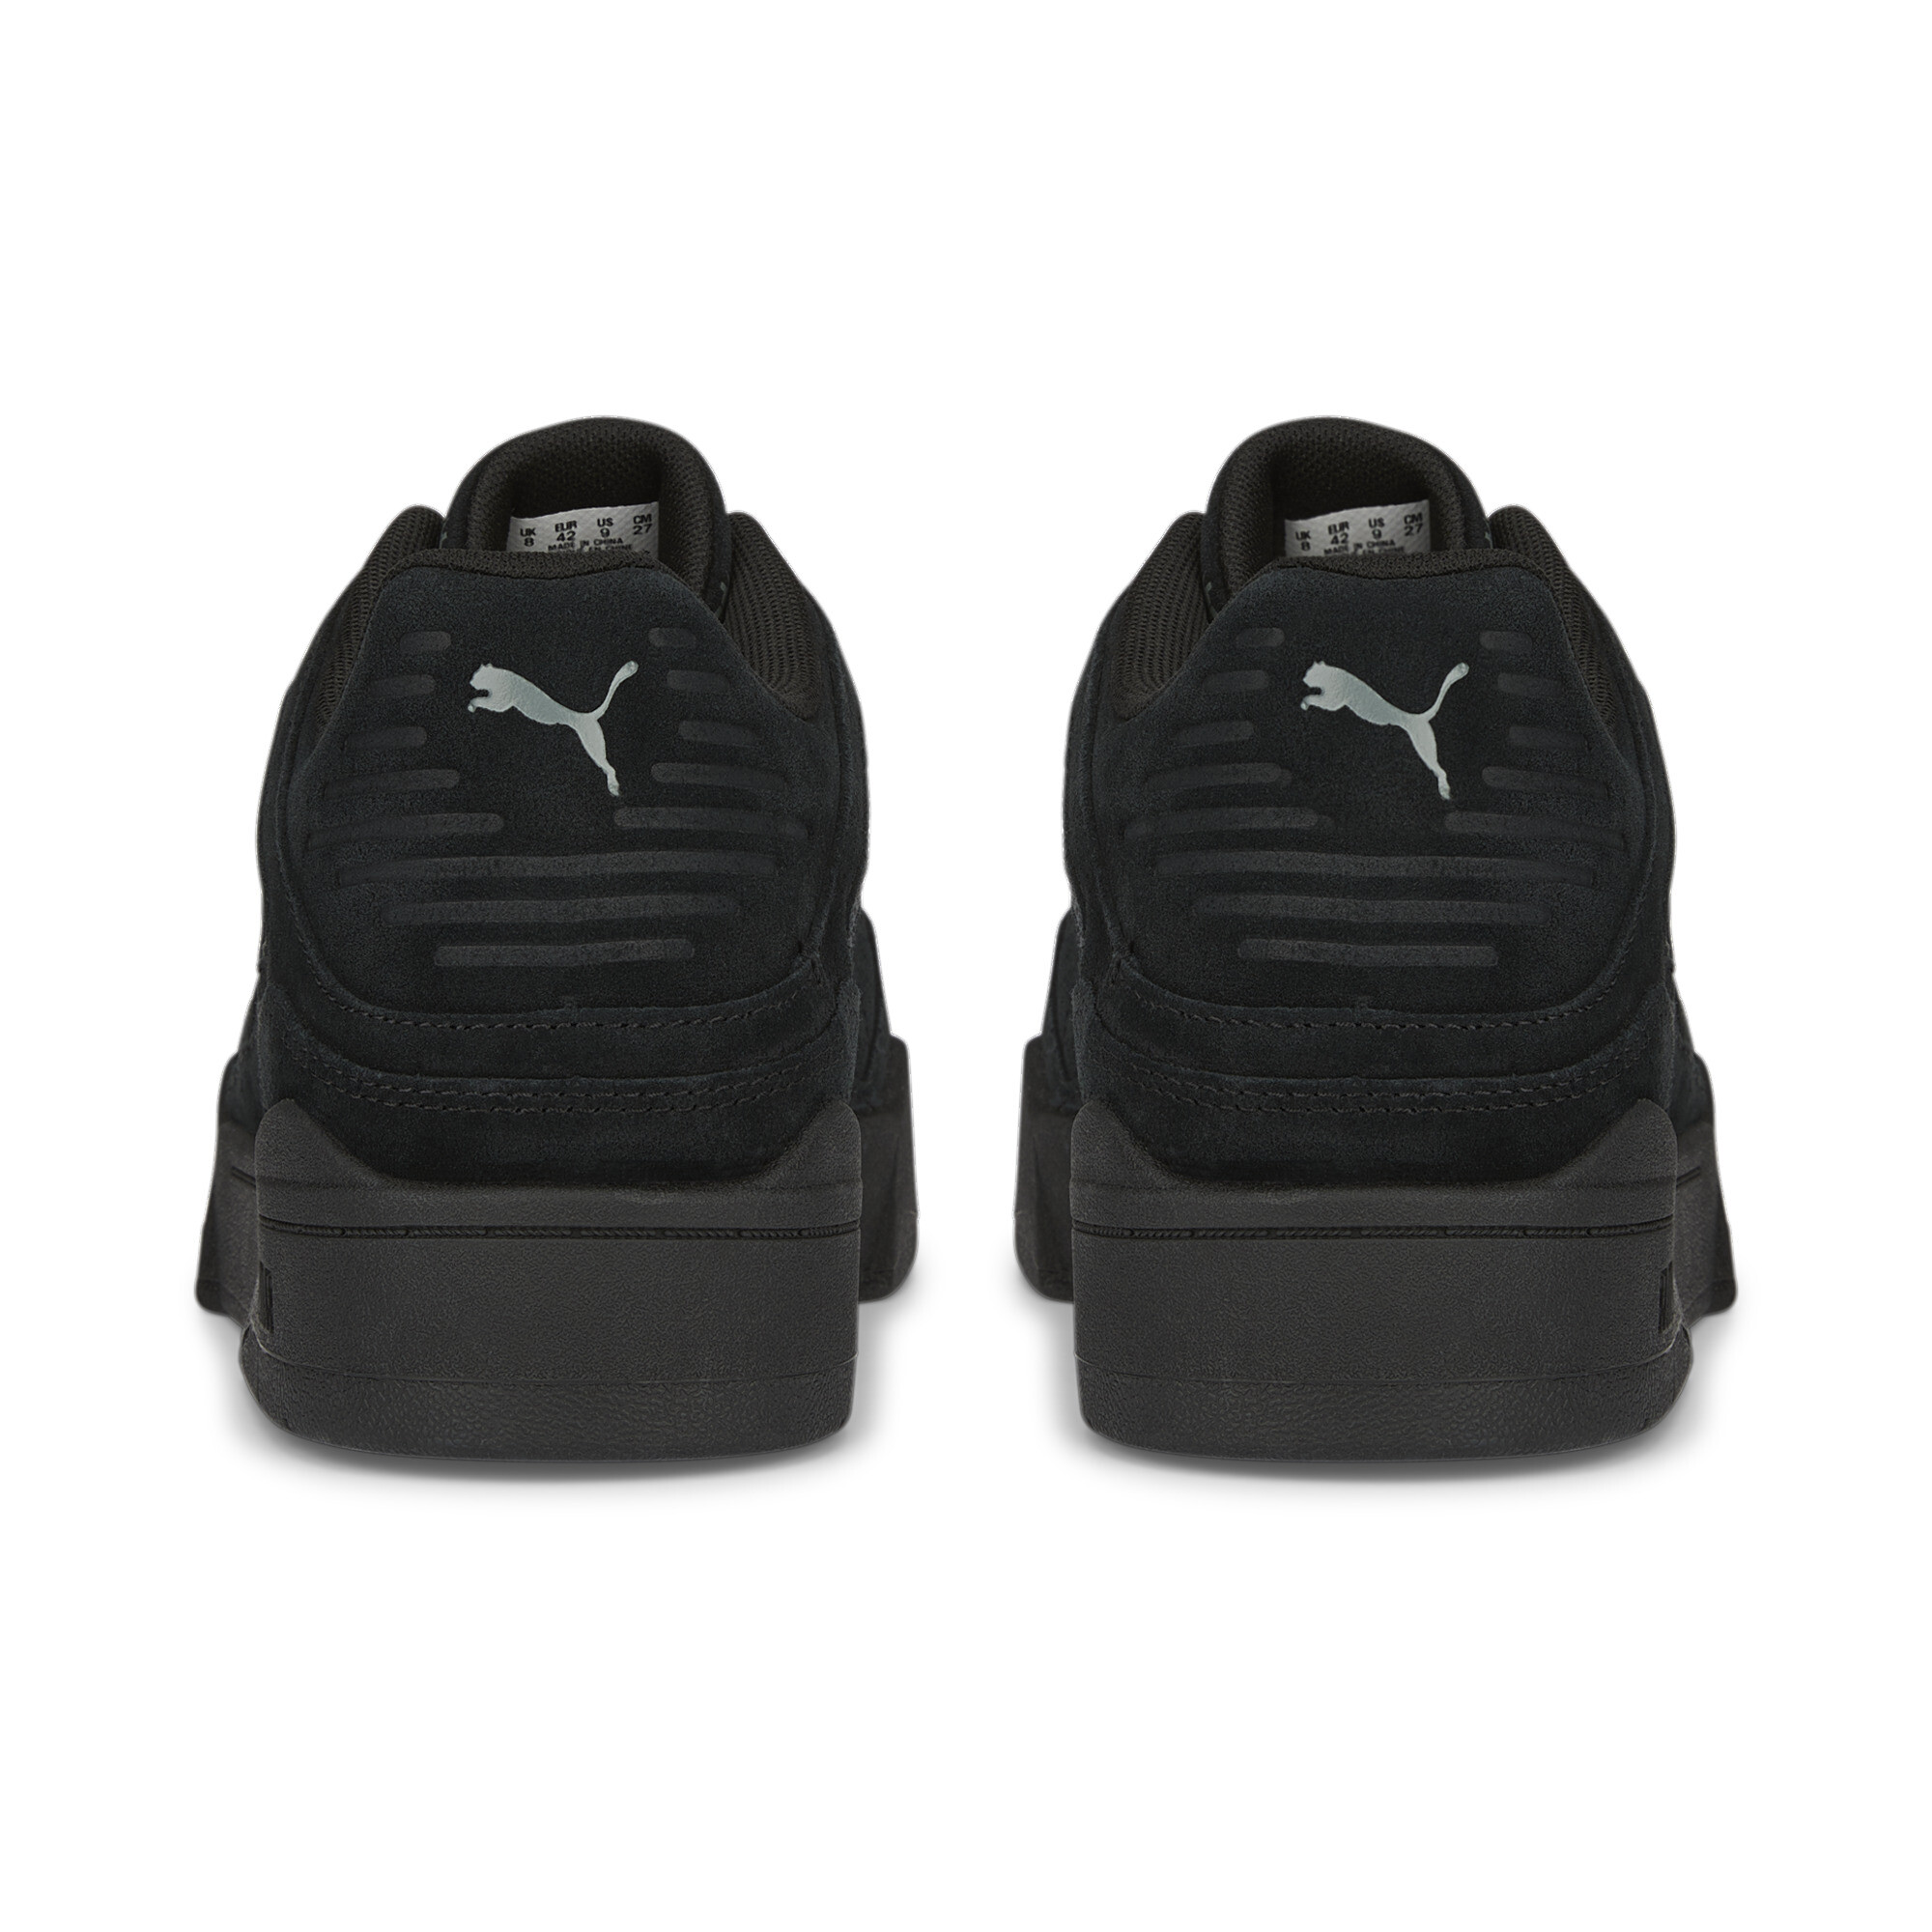 Men's PUMA Slipstream Trend 7etter Sneakers In Black, Size EU 44.5